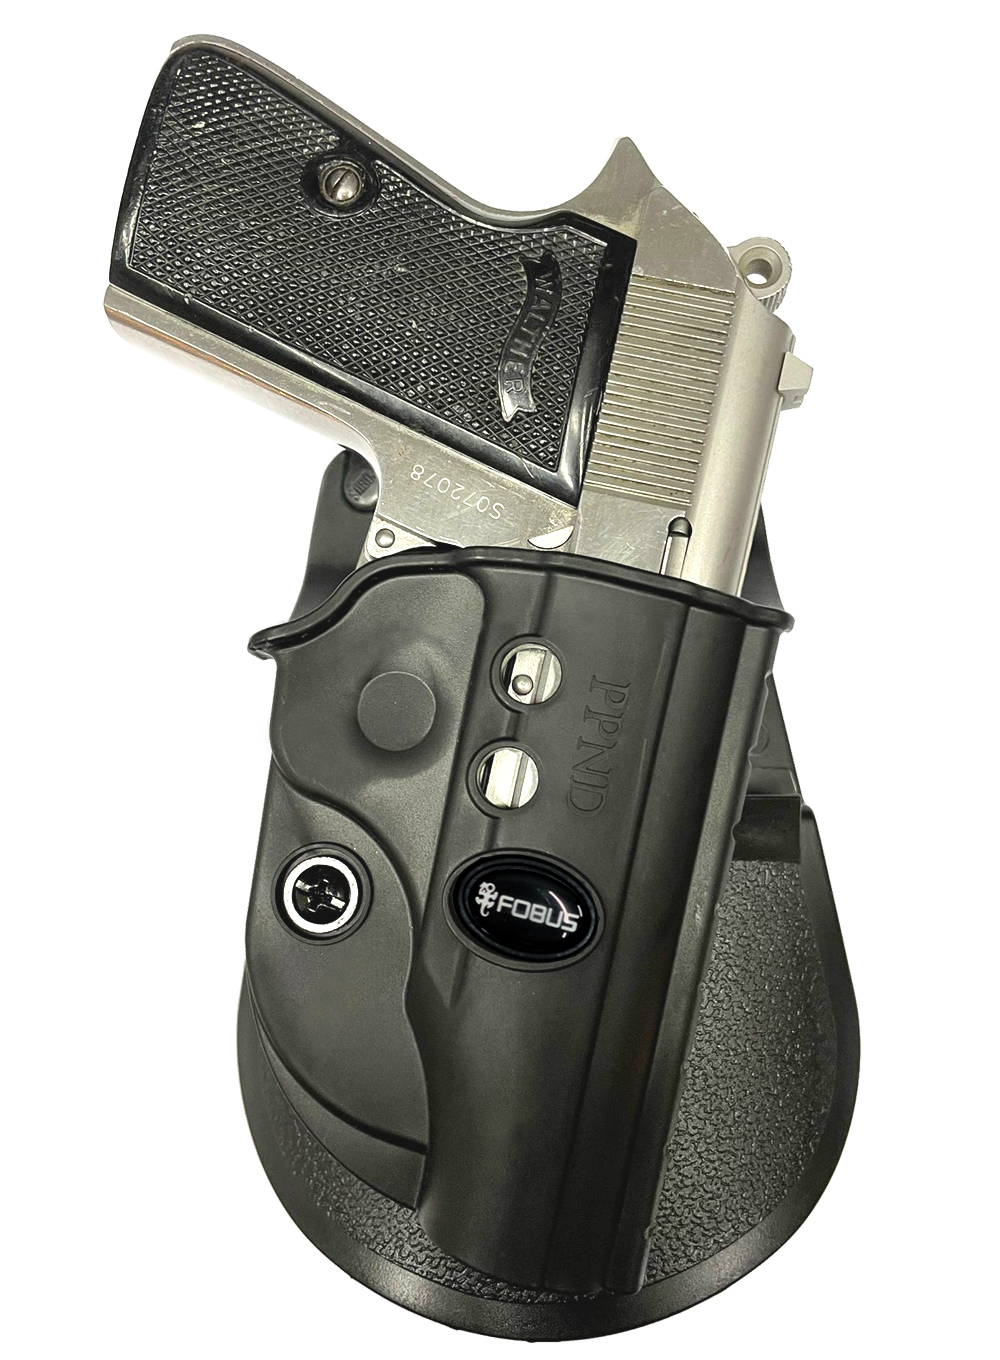 Fobus Conceal carry Belt Holster for Walther PPK